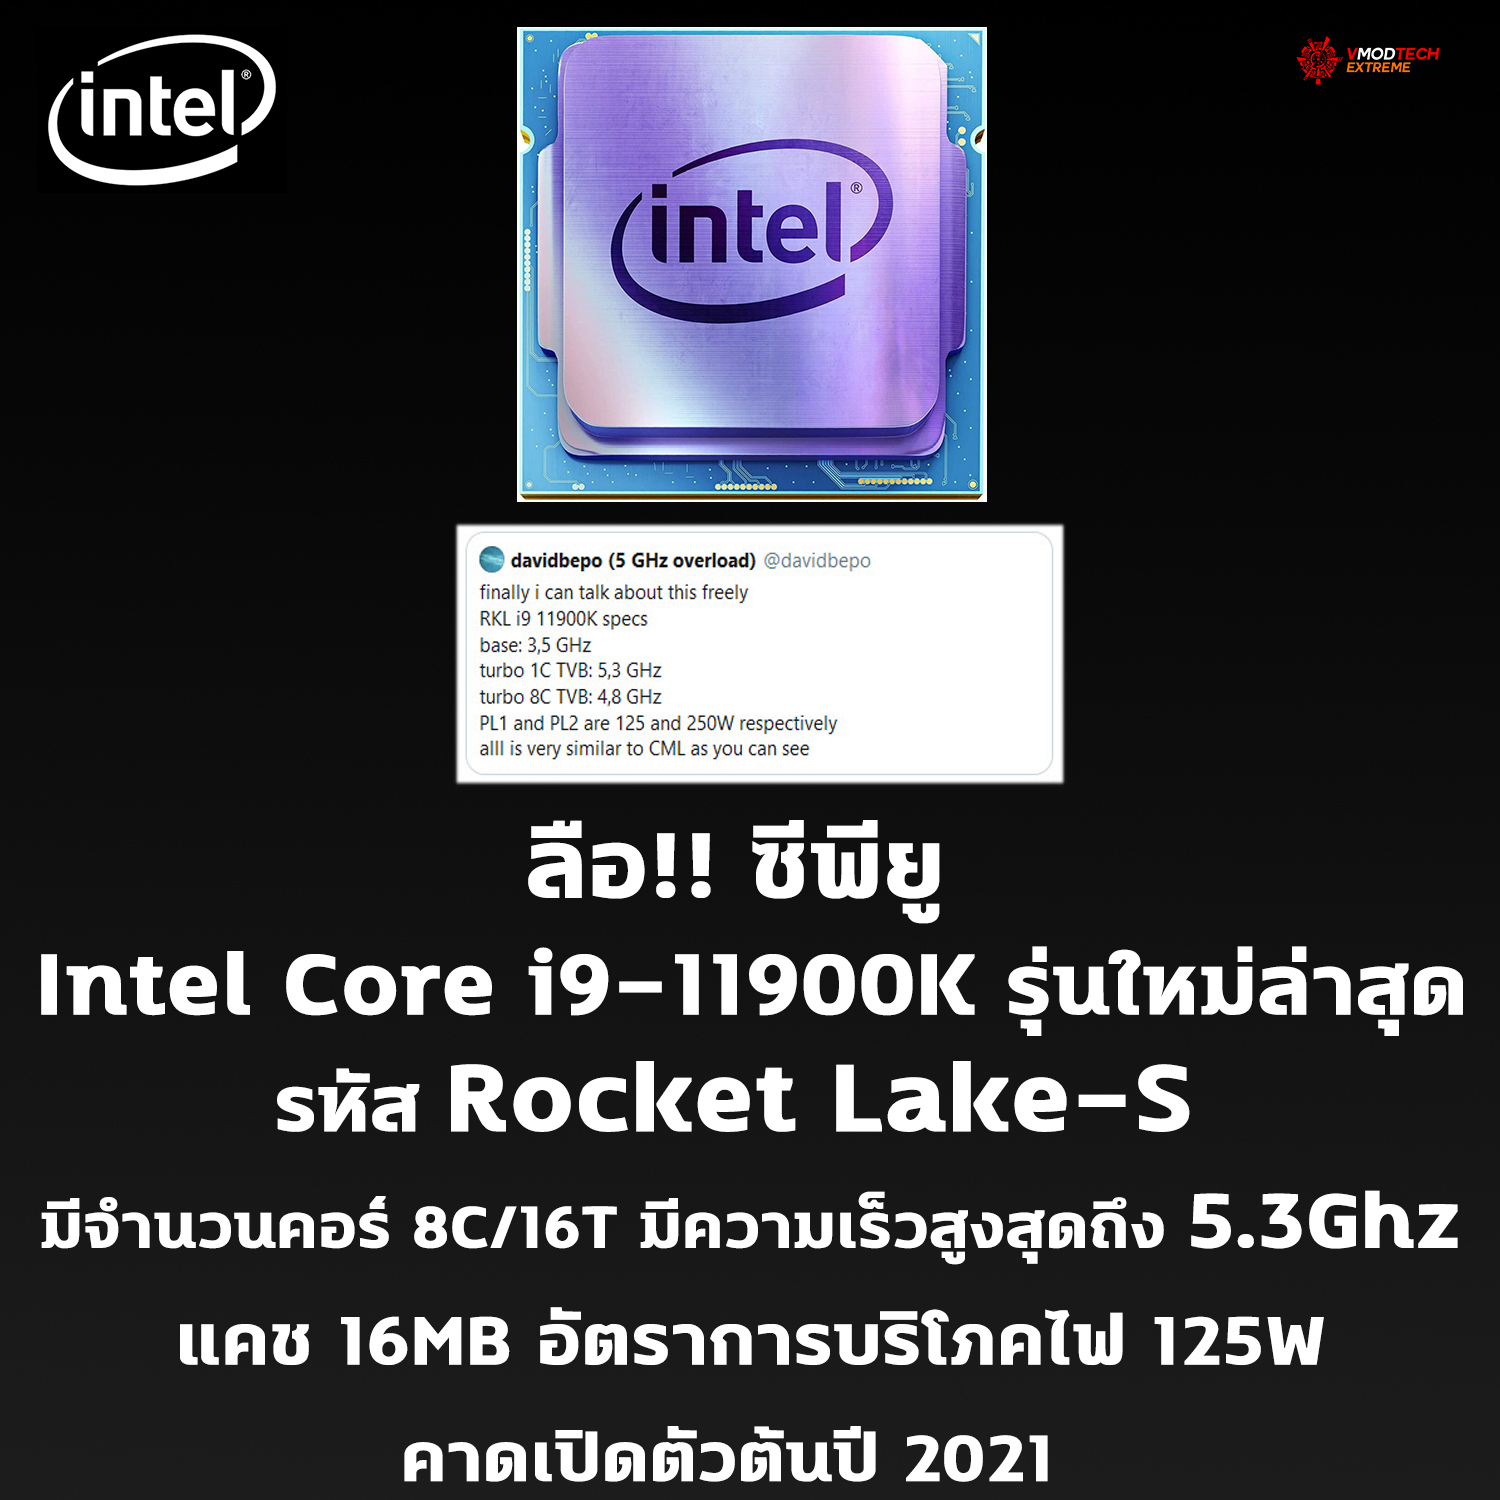 intel core i9 11900k spec 2021 ลือ!! ซีพียู Intel Core i9 11900K รุ่นใหม่ล่าสุดรหัส Rocket Lake S มีความเร็วสูงสุดถึง 5.3Ghz กันเลยทีเดียว